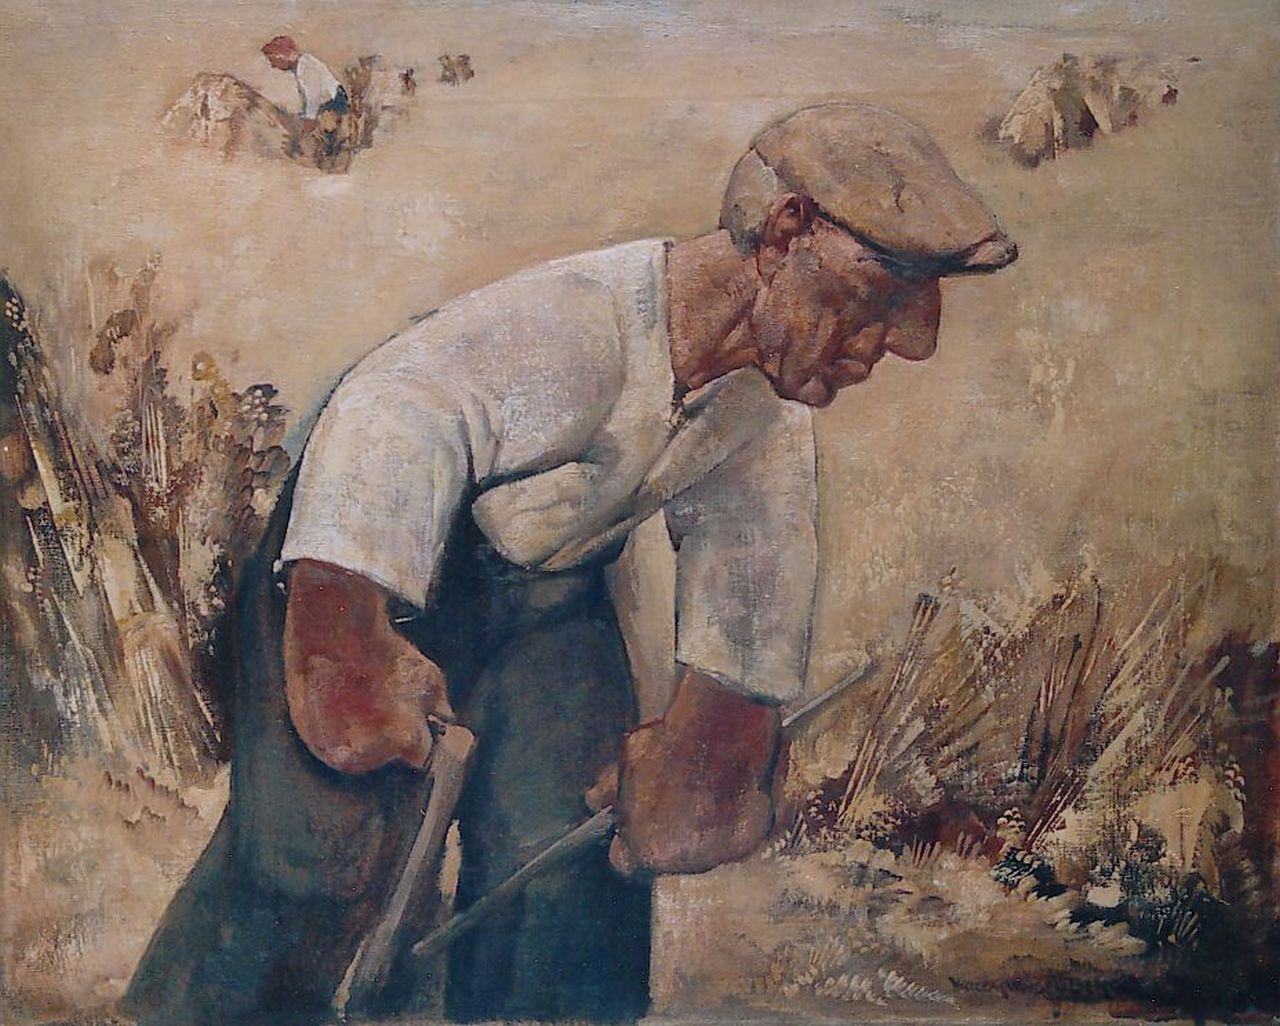 Berg W.H. van den | 'Willem' Hendrik van den Berg, Harvesting farmer, Öl auf Leinwand 40,7 x 50,6 cm, signed l.r.